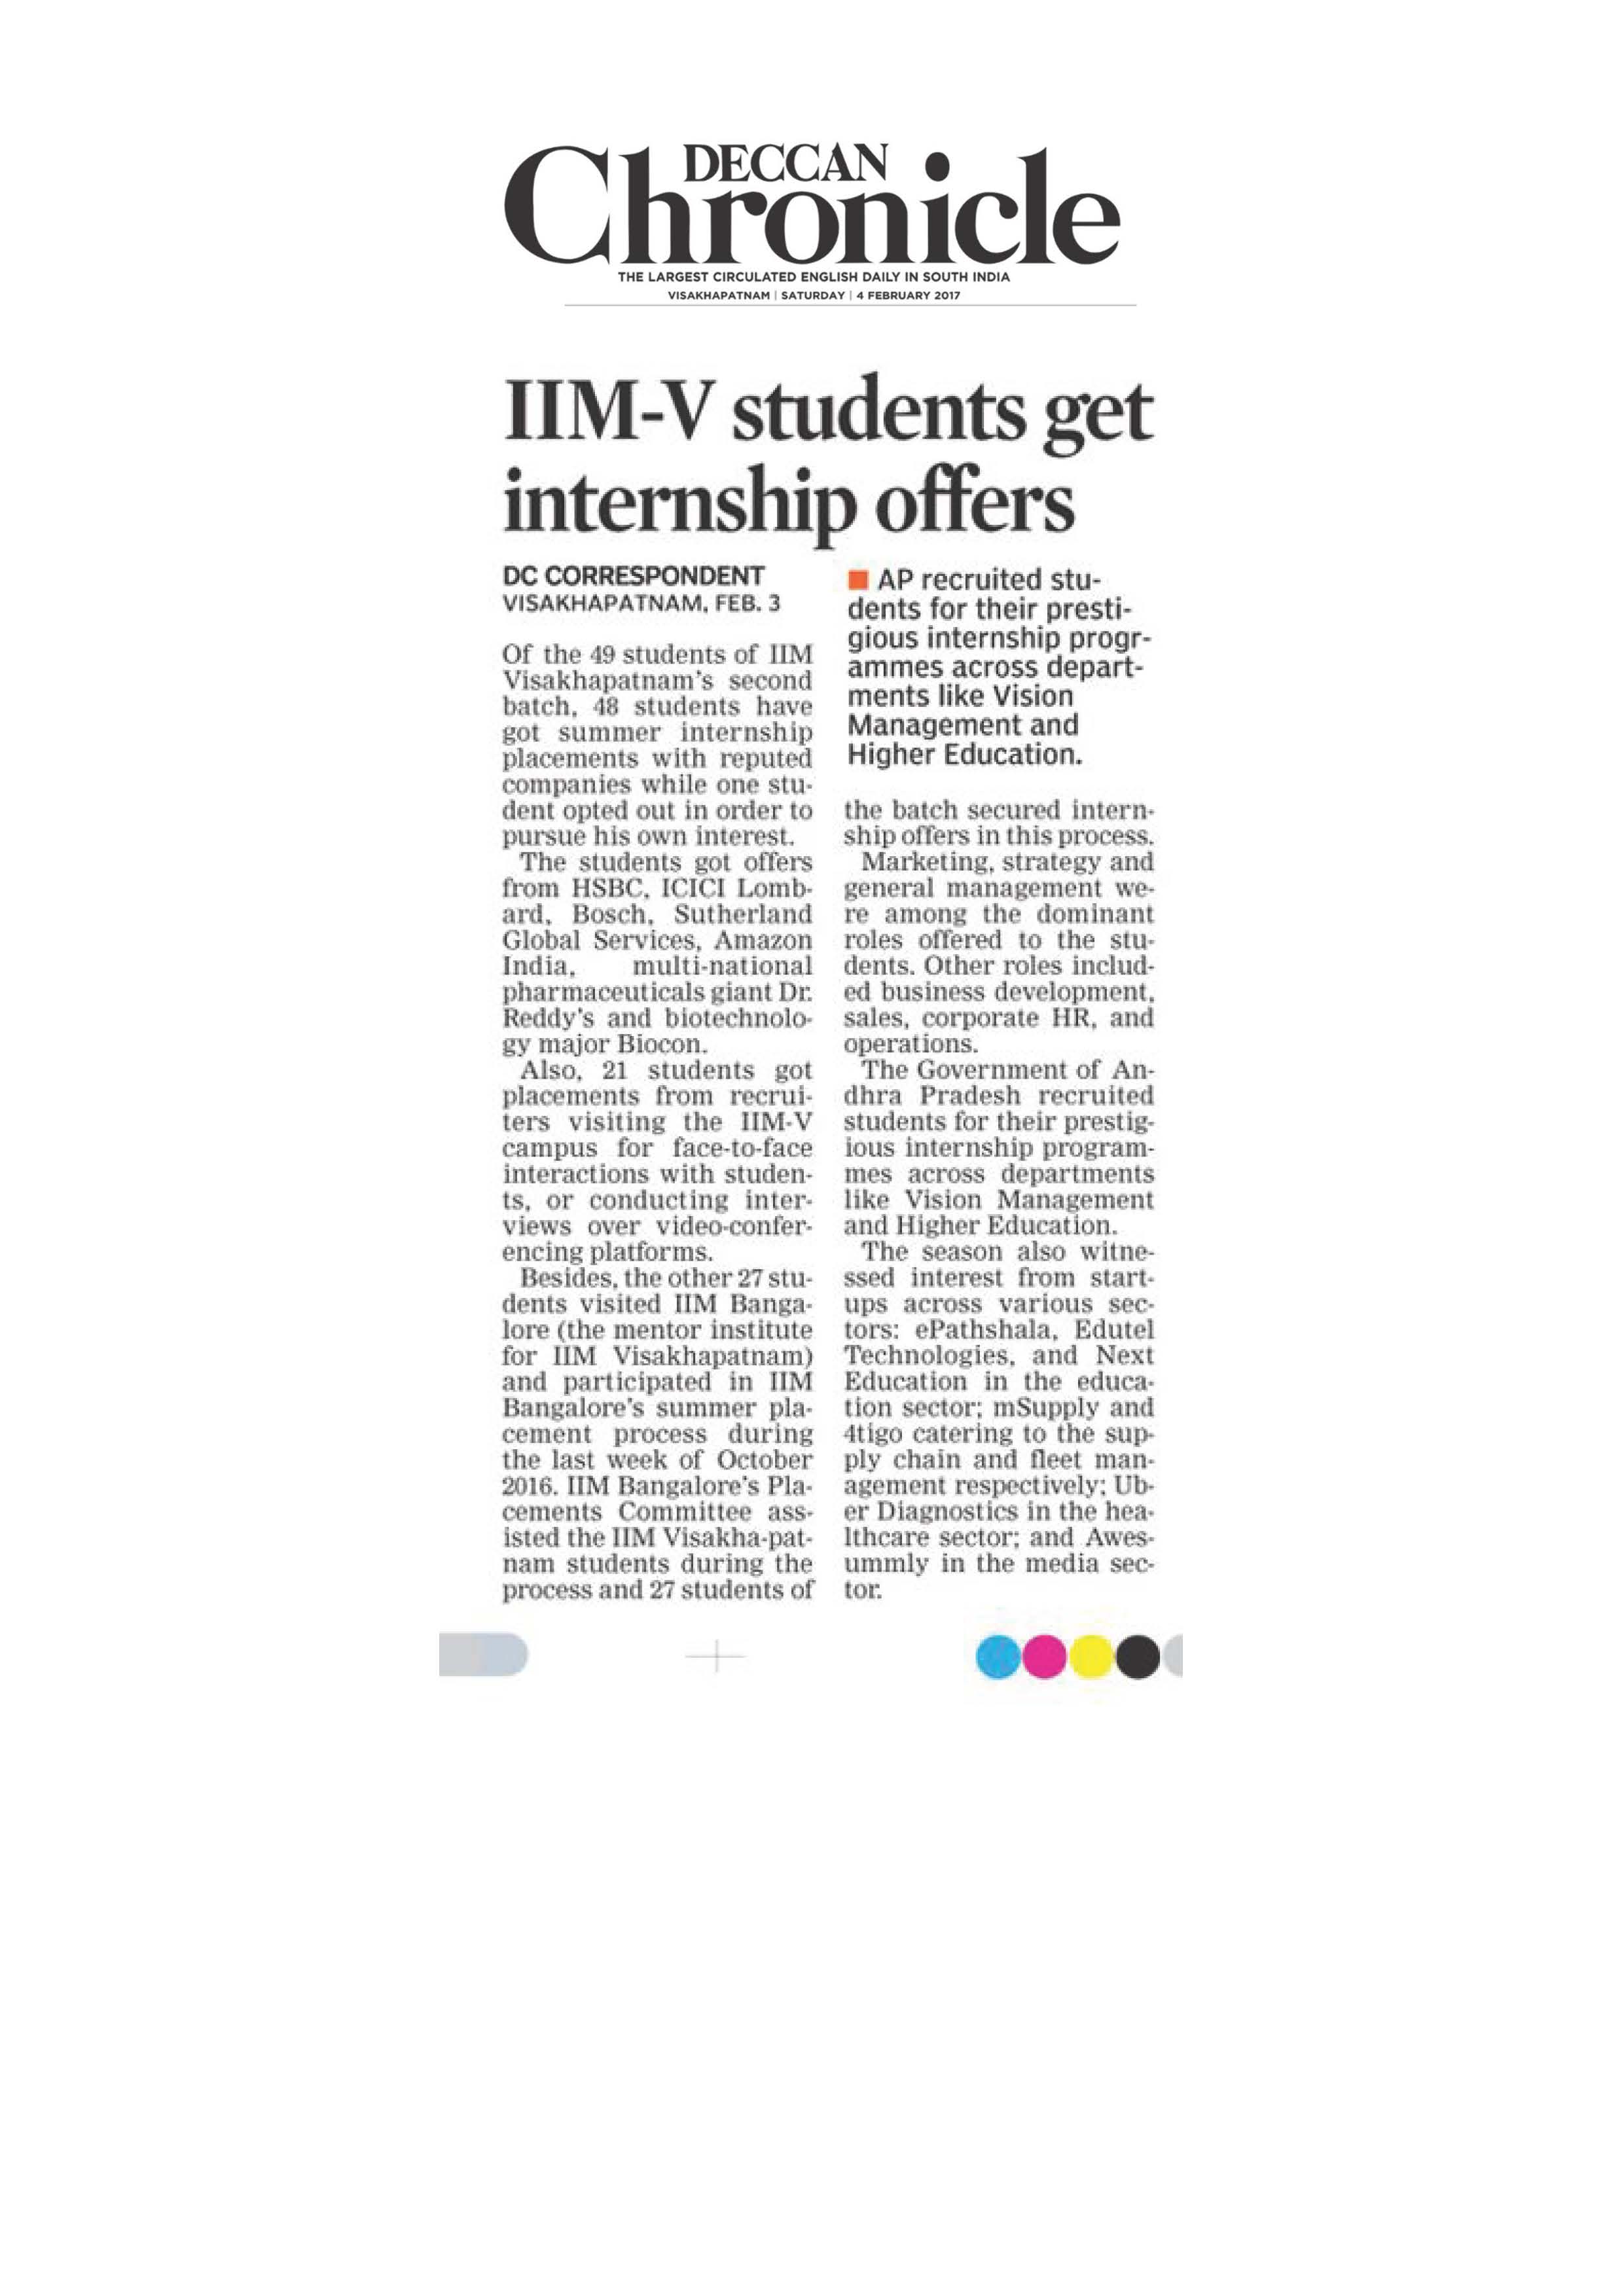 IIM-V students get internship offers - 04.02.2017